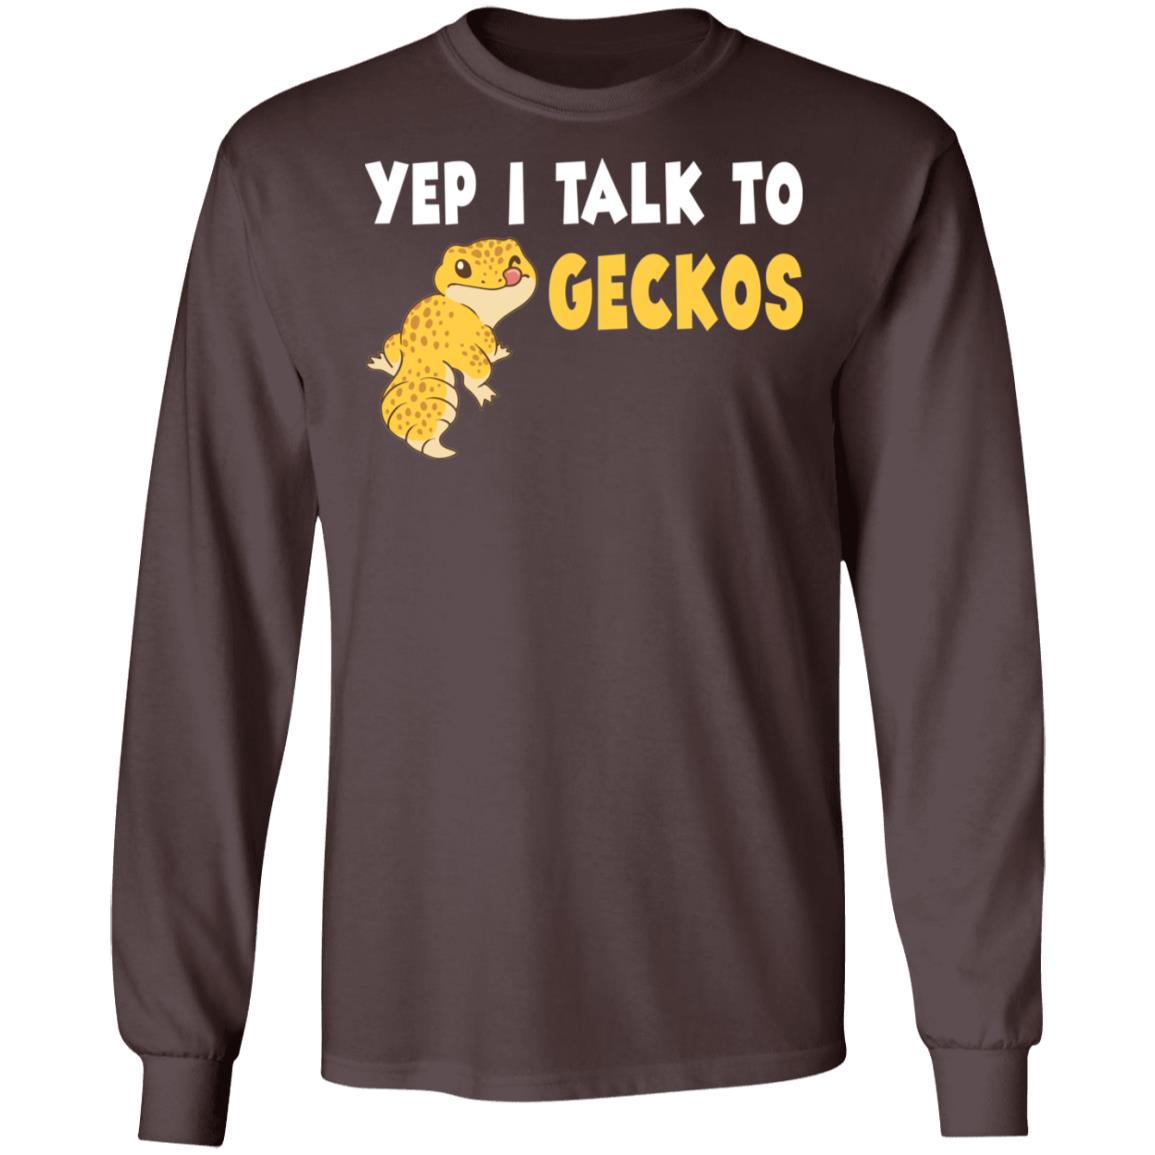 Yep I Talked To Geckos - Long Sleeved Men's T-Shirt